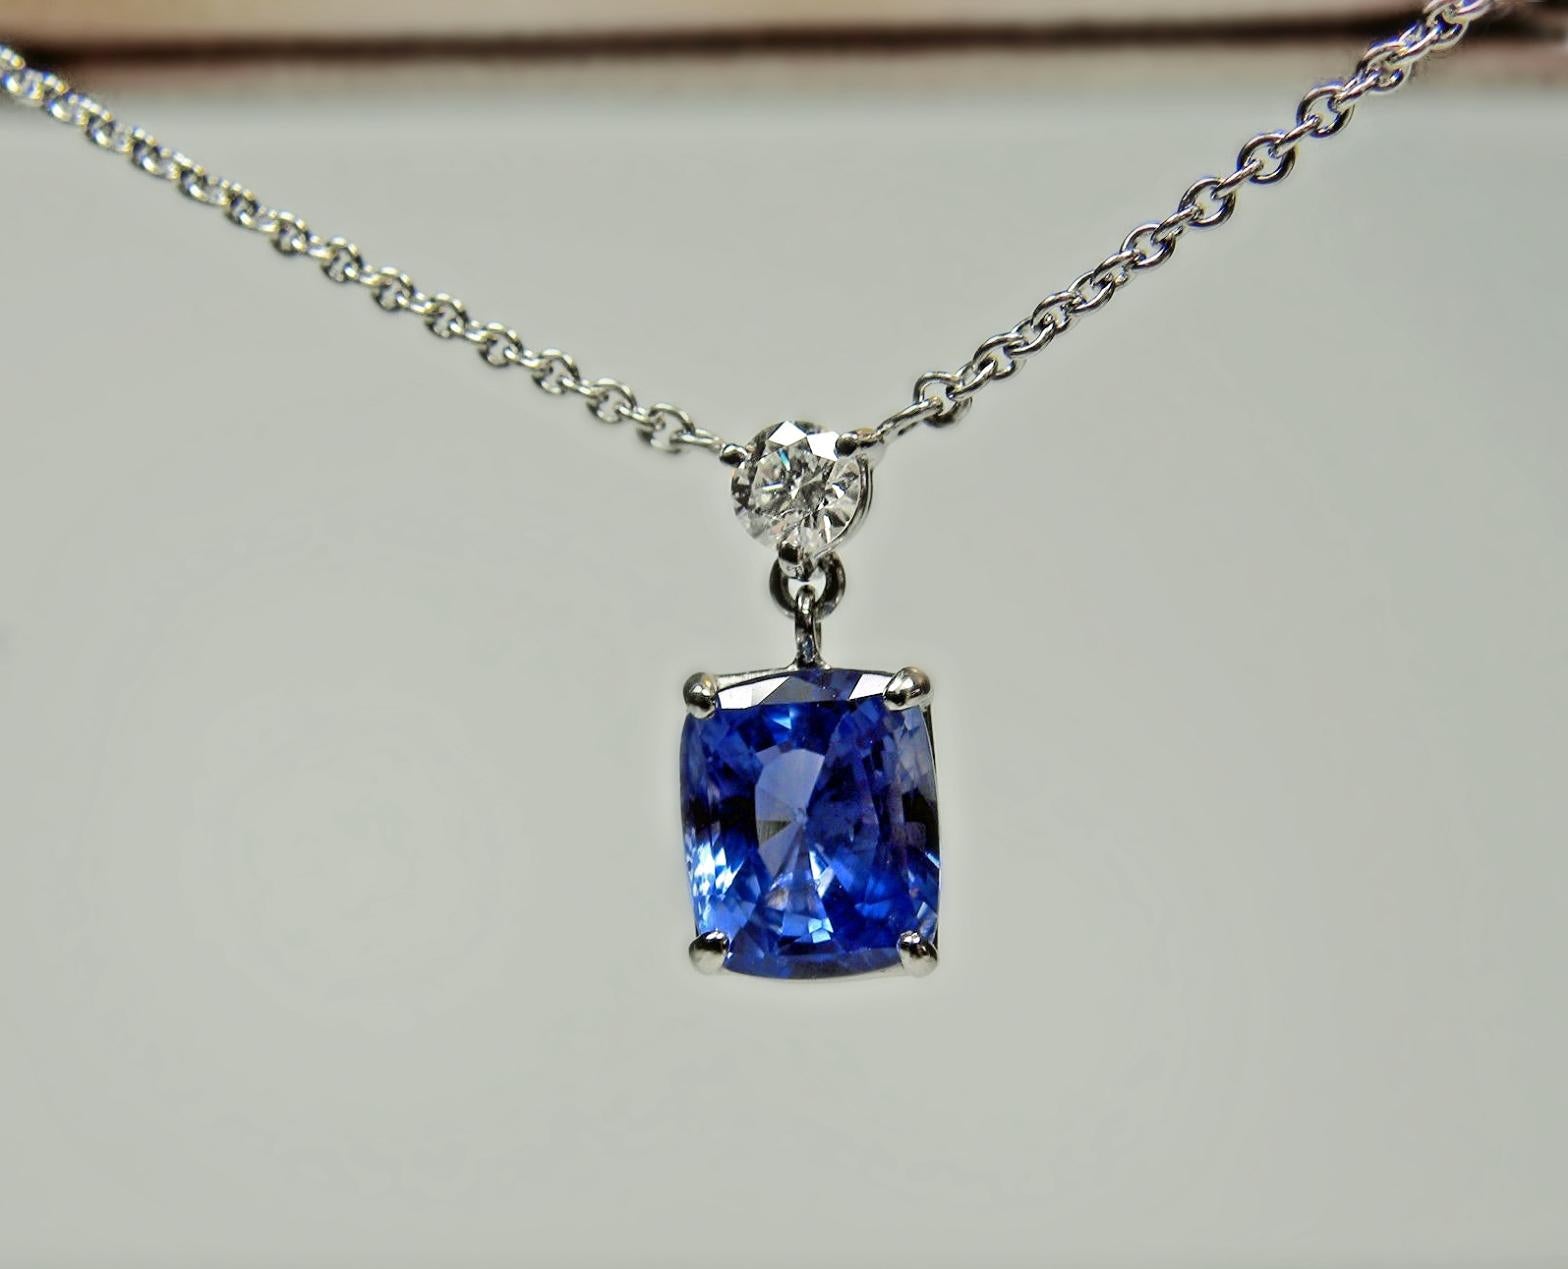 Cushion Cut 4.15 Carat Natural Blue Sapphire and Diamond Pendant Necklace Platinum 950